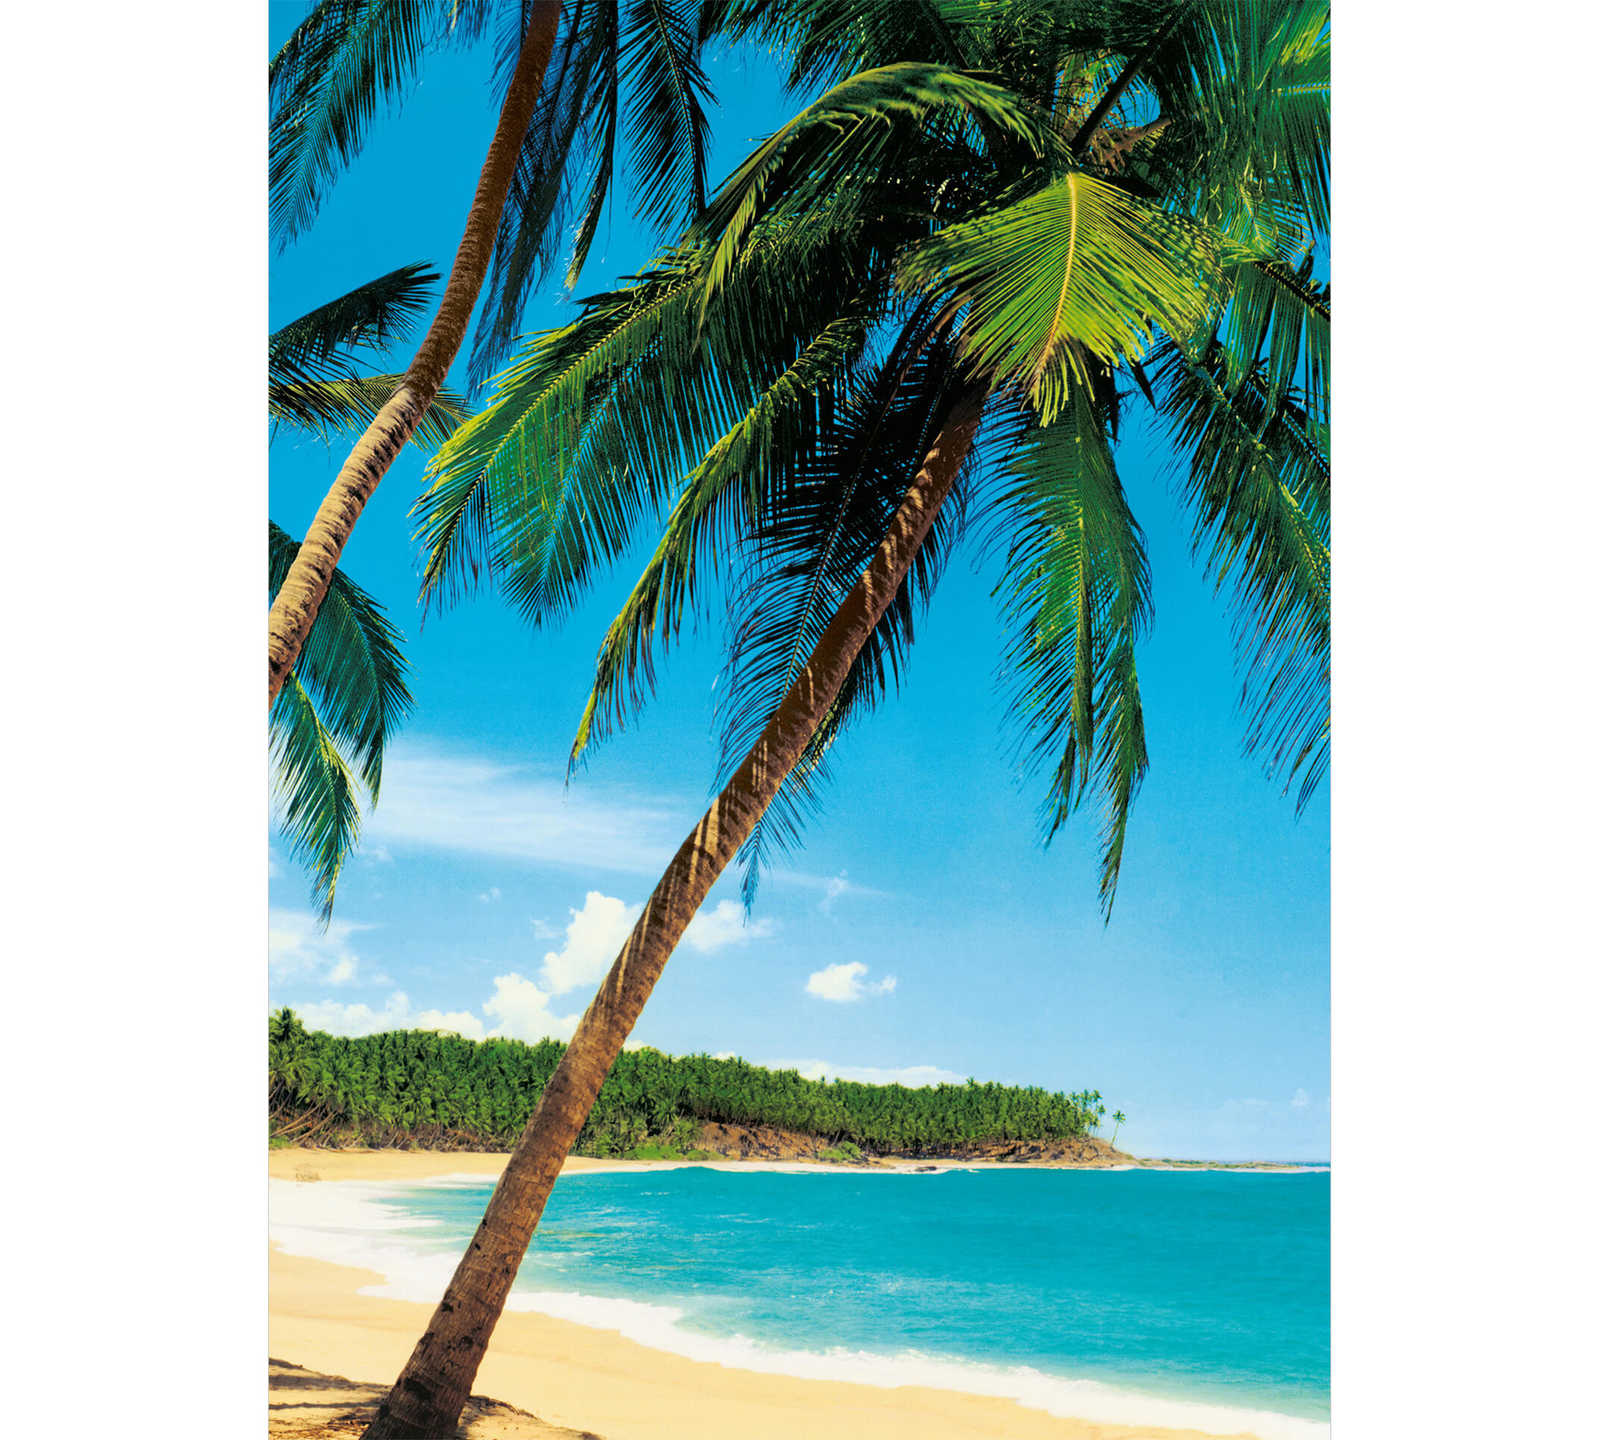 Palm trees & beach mural South Seas in portrait format
